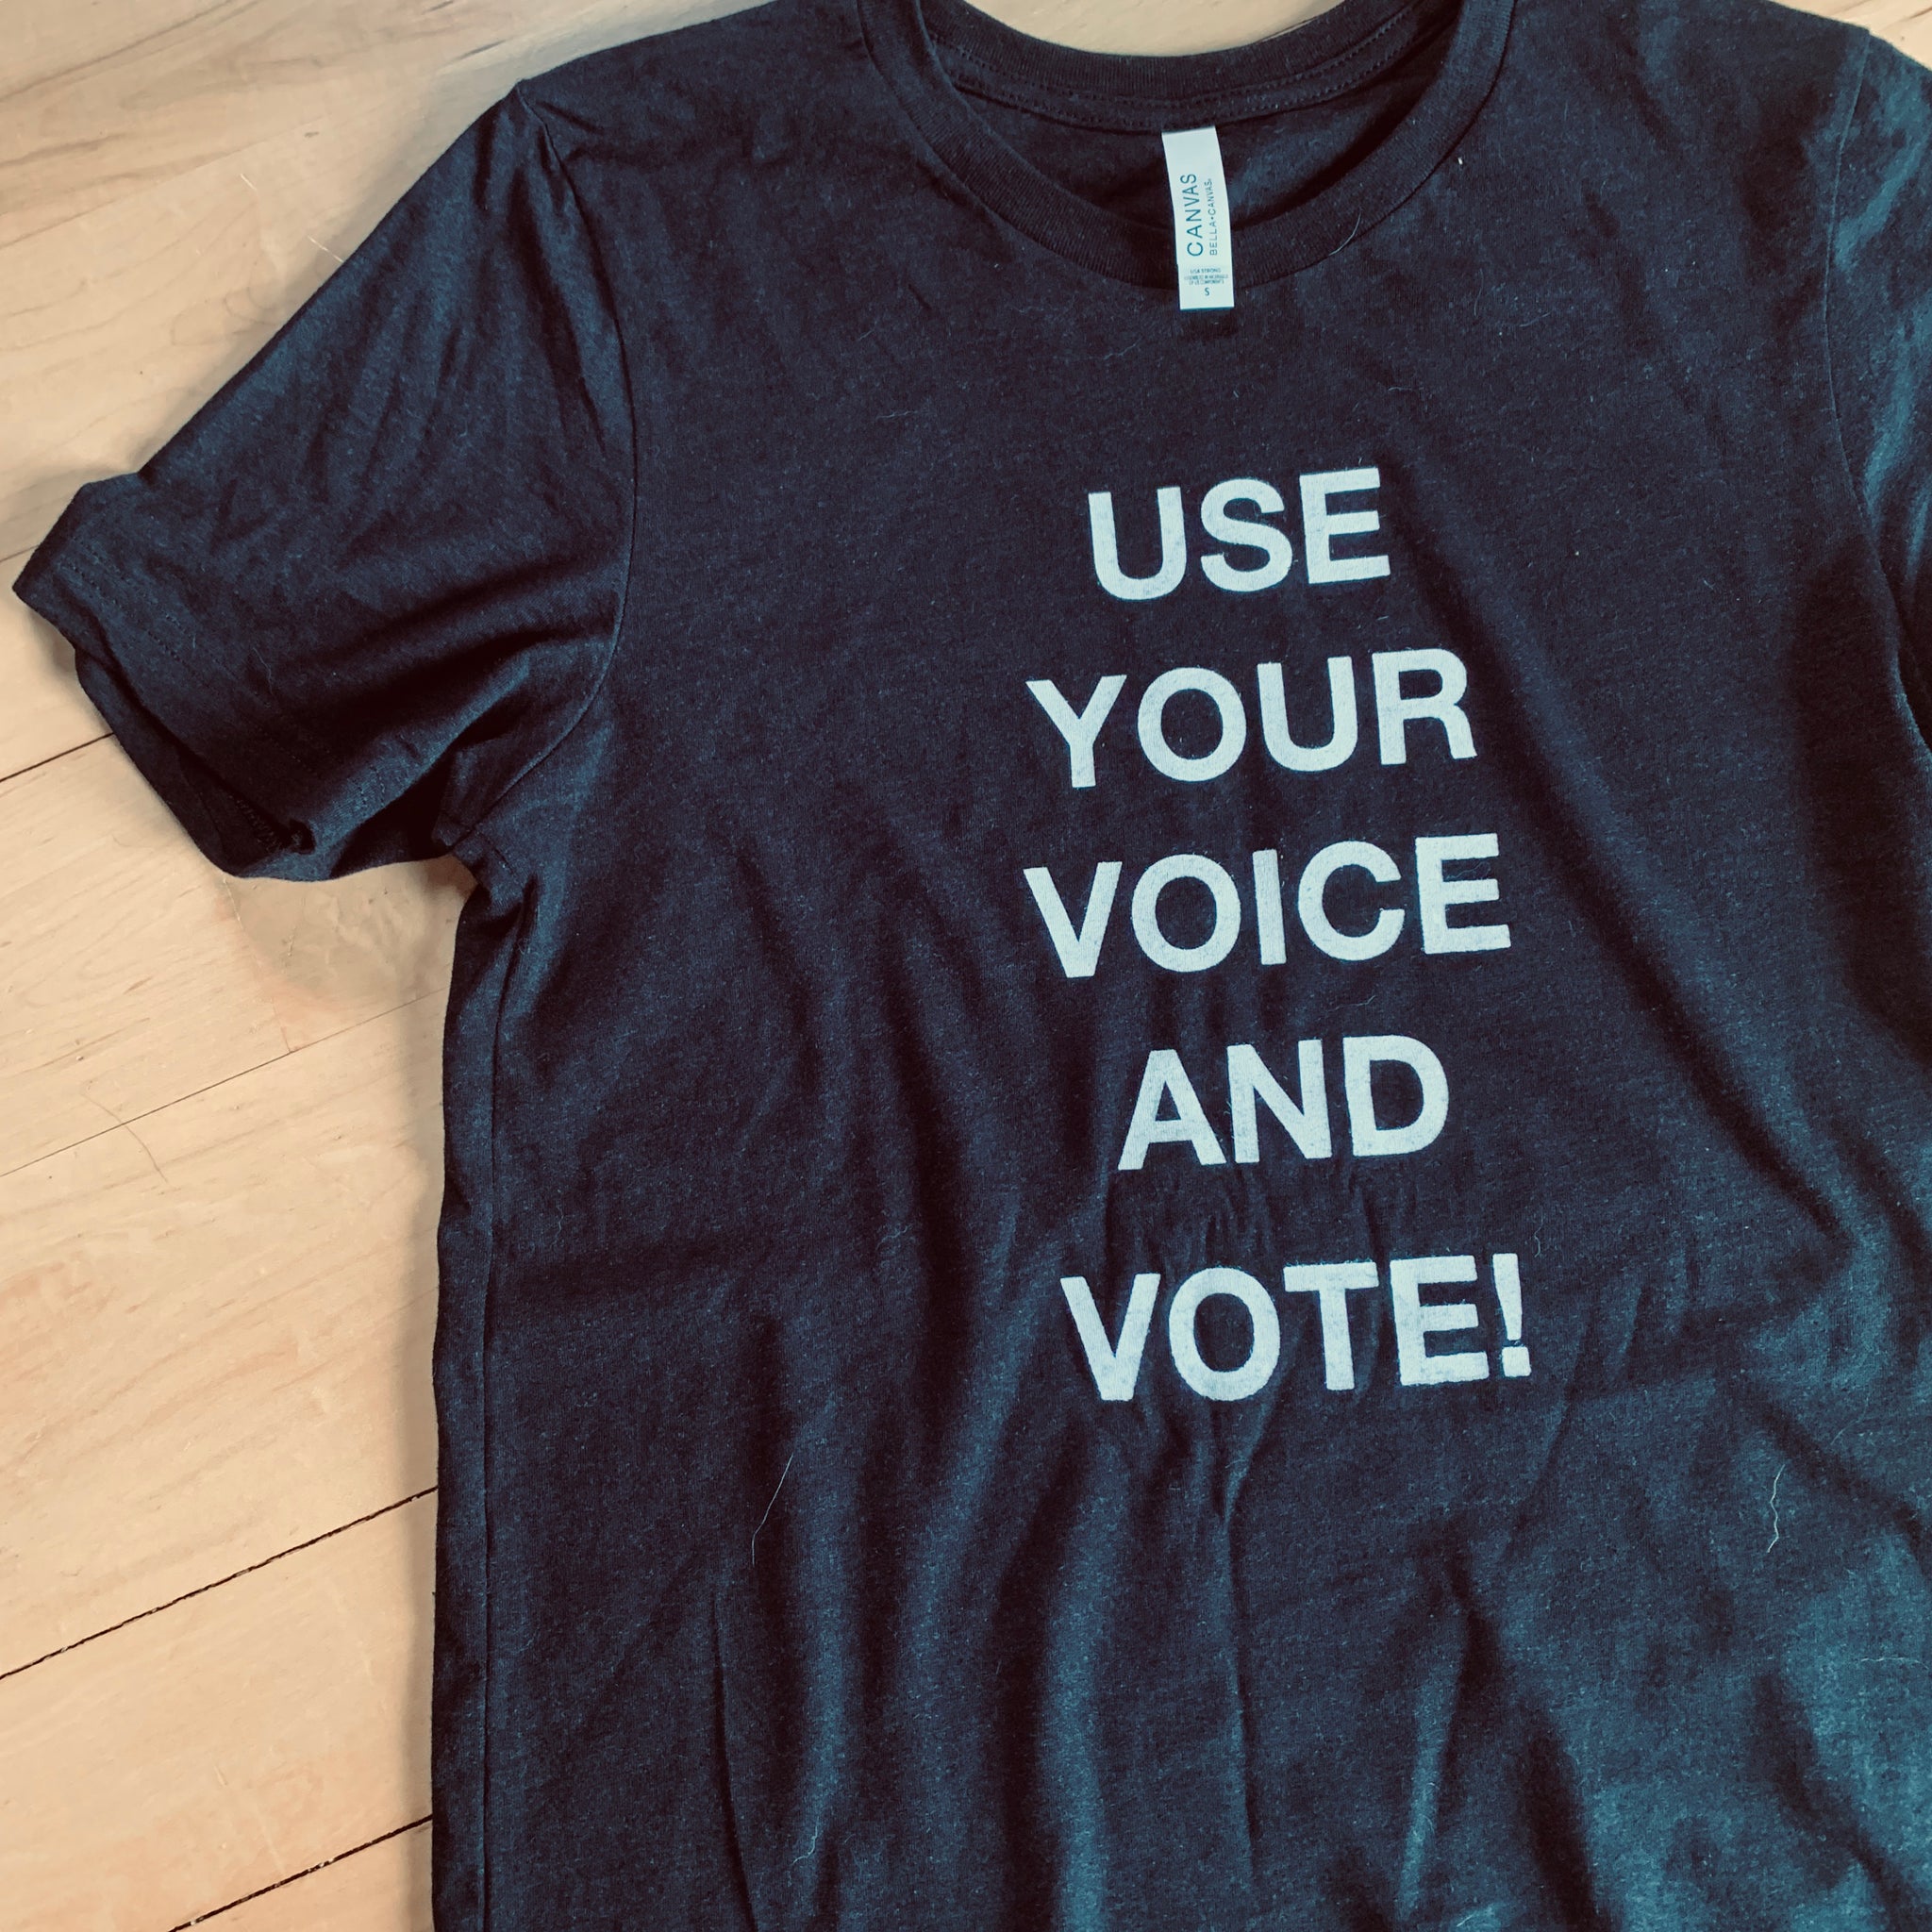 VOTE Adult T-shirt